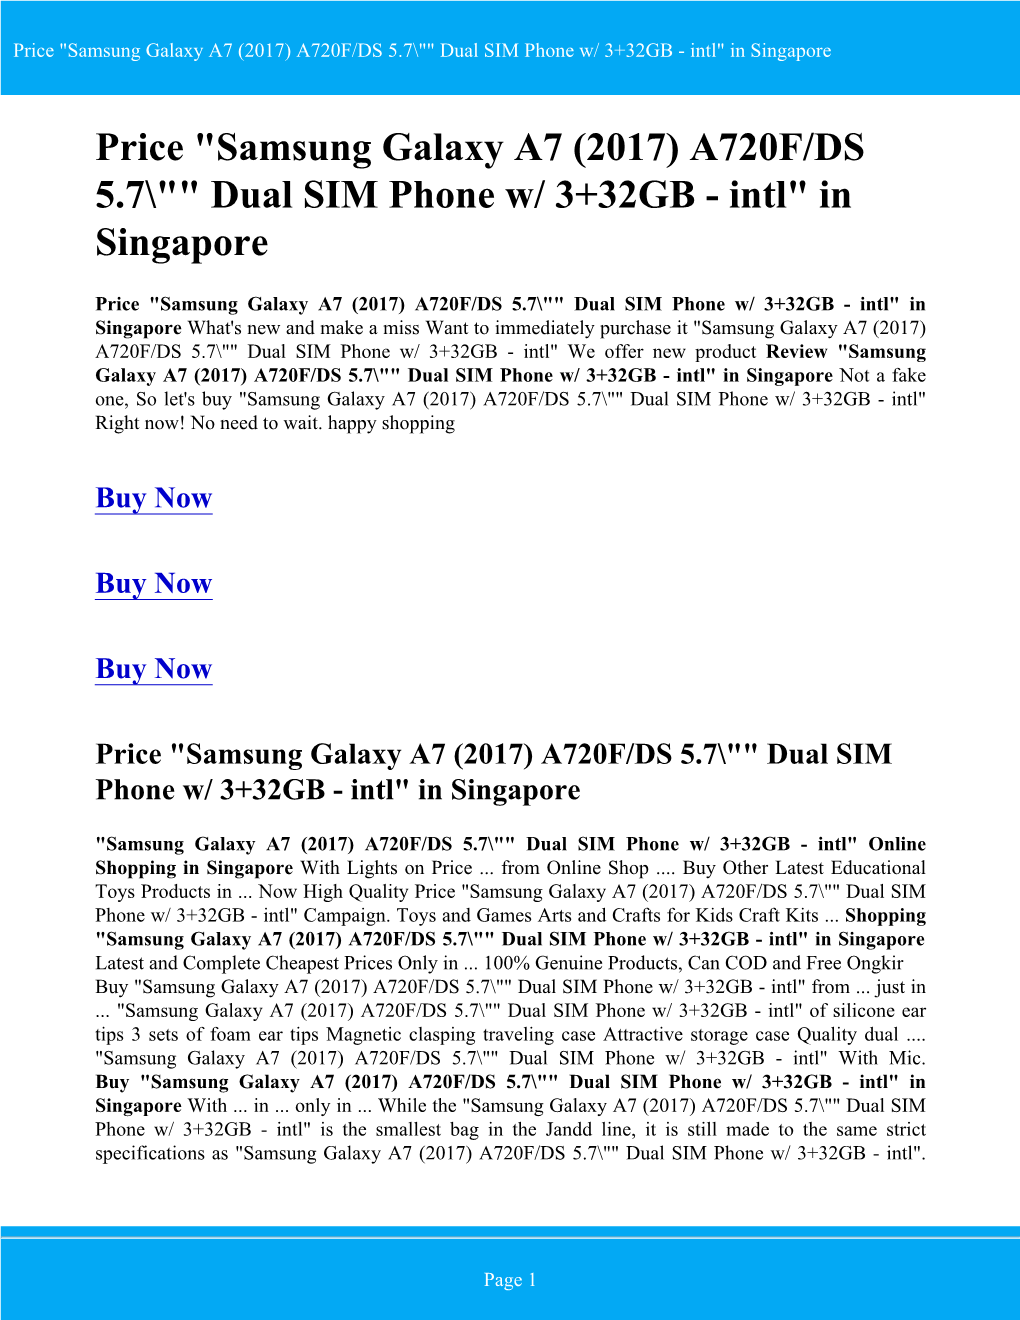 Price "Samsung Galaxy A7 (2017) A720F/DS 5.7\"" Dual SIM Phone W/ 3+32GB - Intl" in Singapore